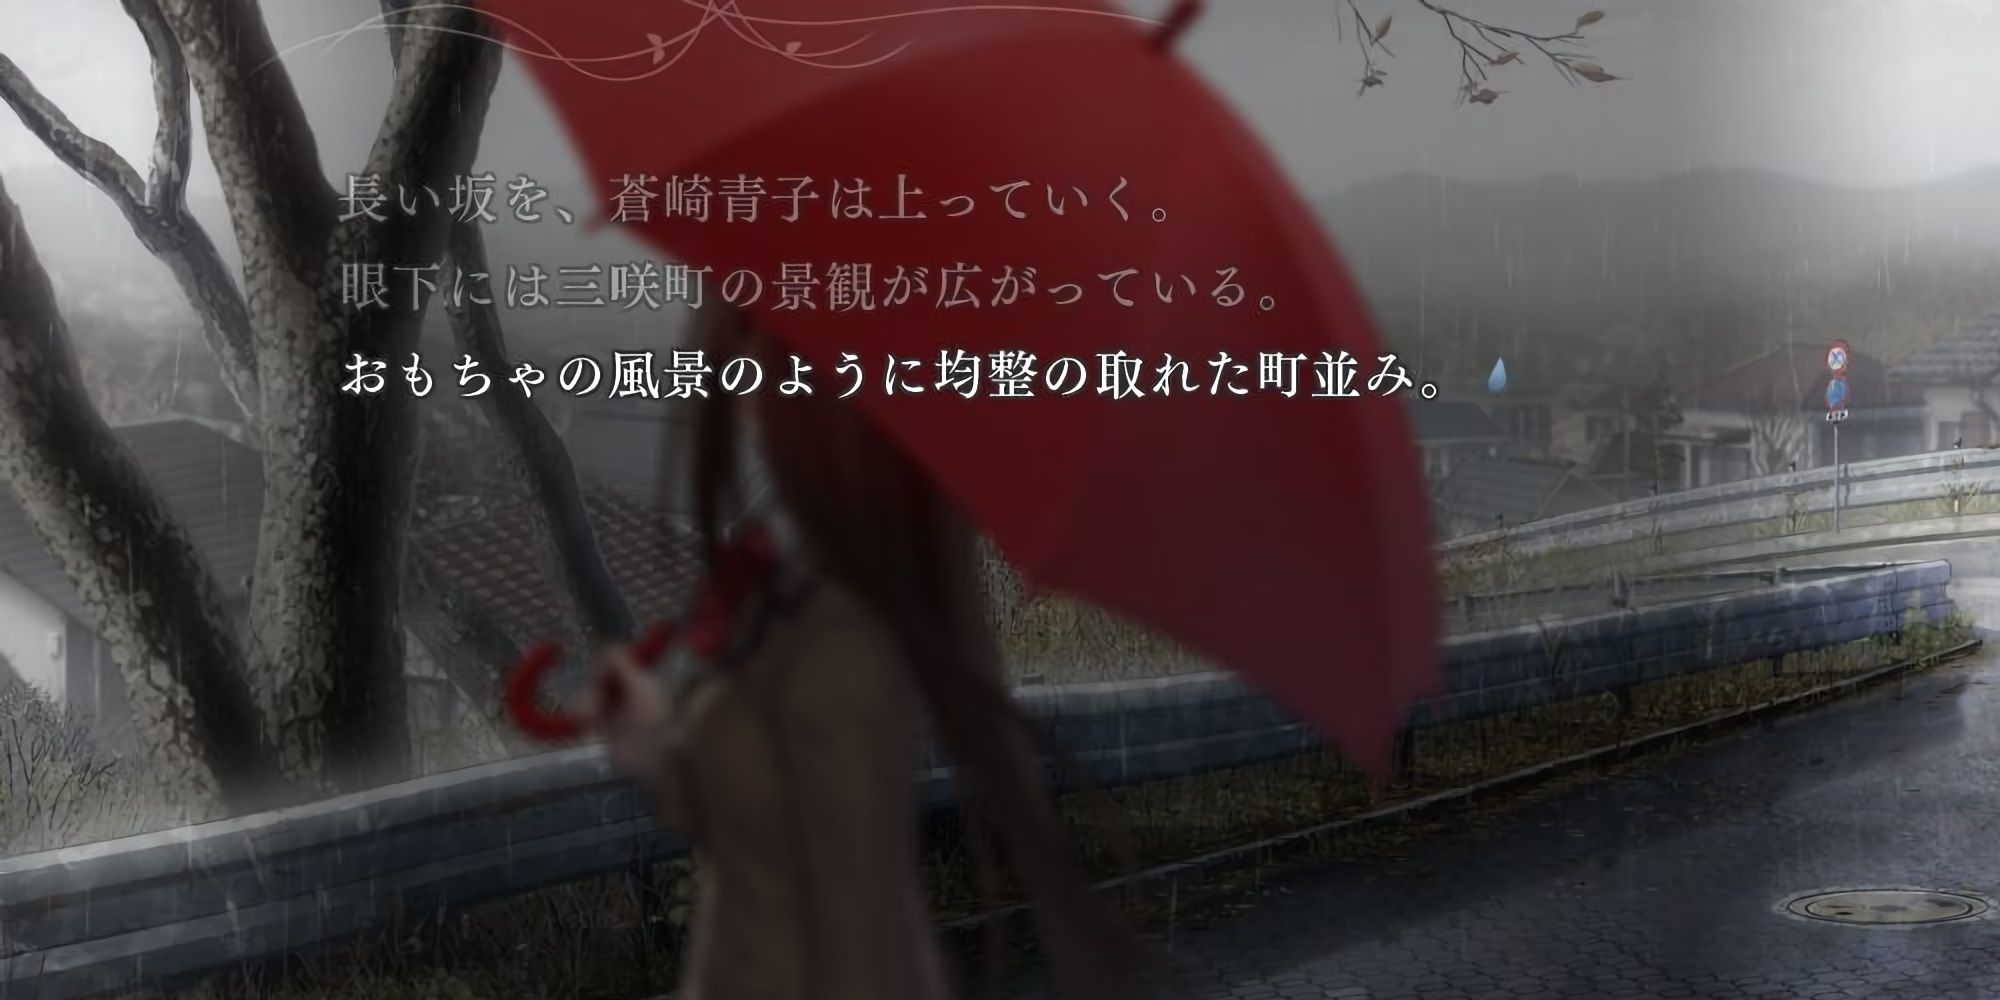 Mahoyo - An image of Aoko holding an umbrella while walking through the rain.